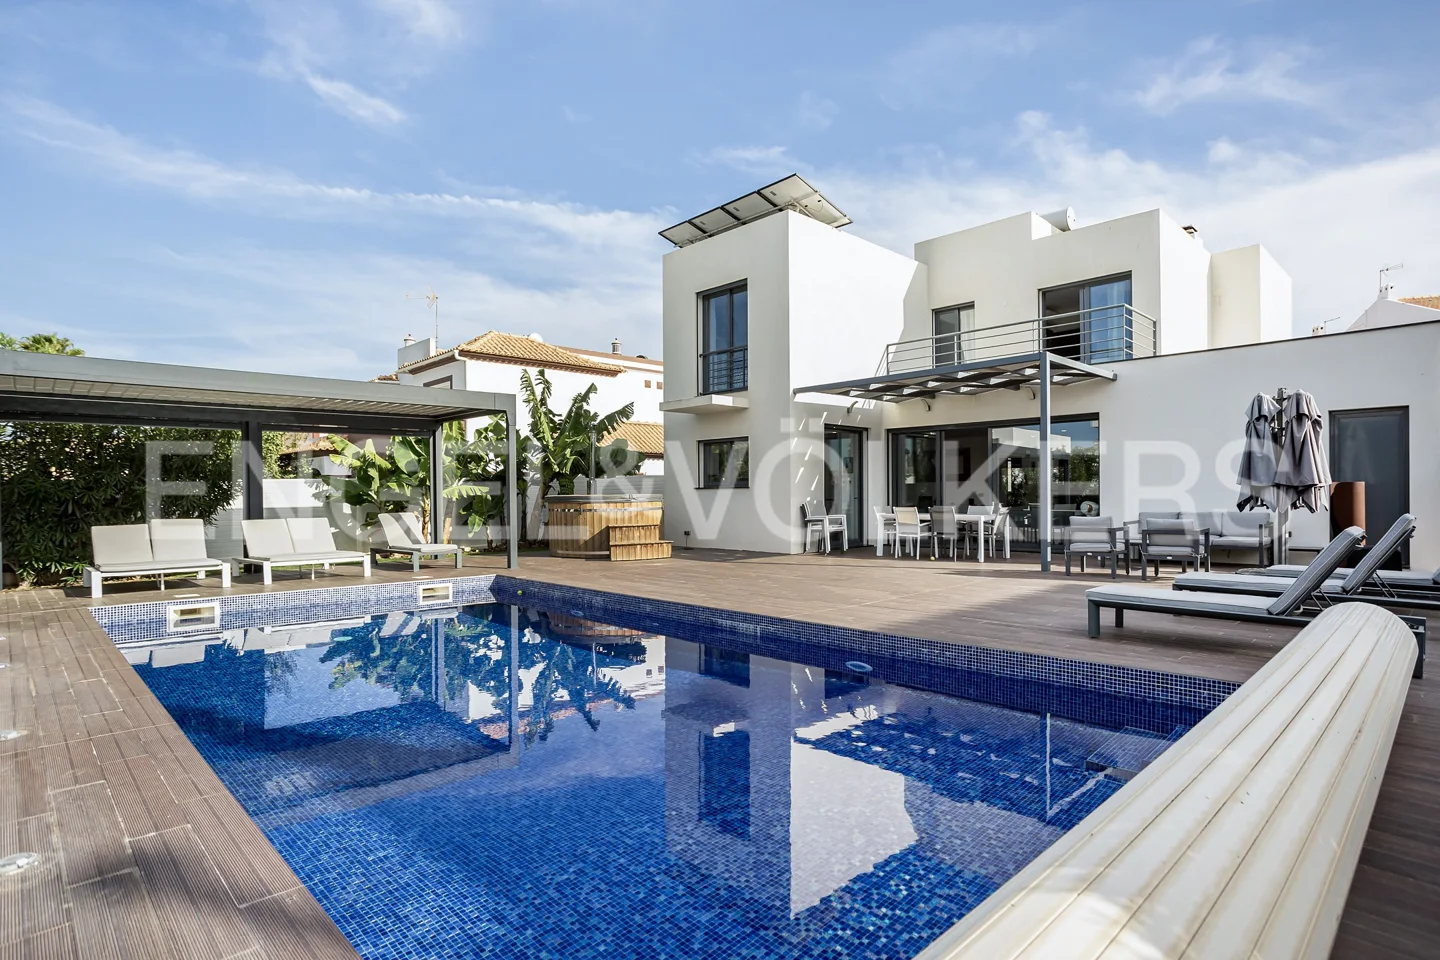 4 Bedroom Modern Villa with Heated Pool